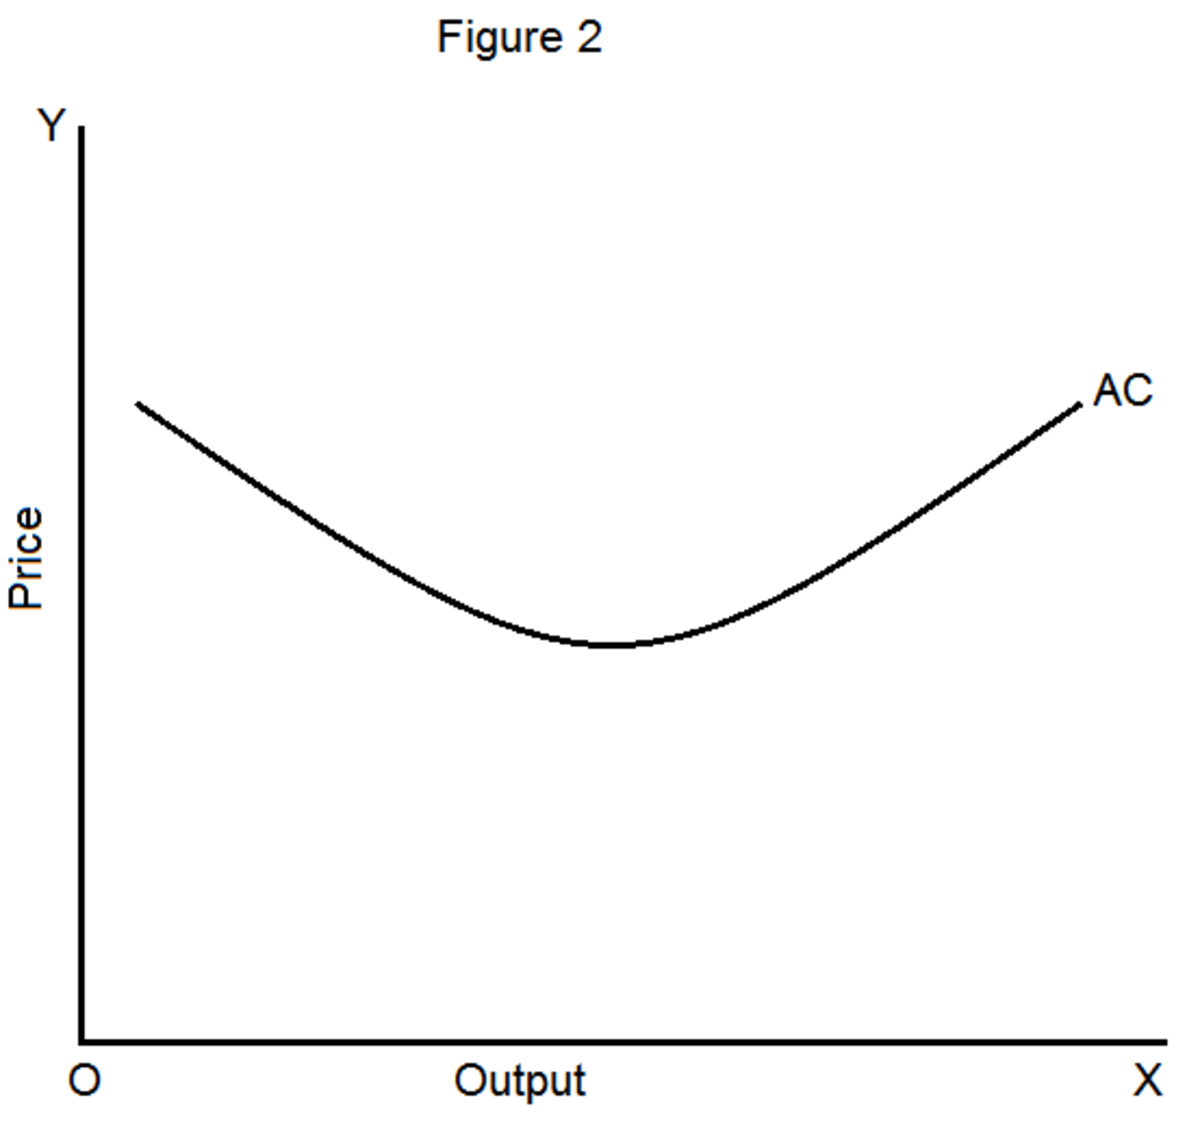 u shaped average cost curve